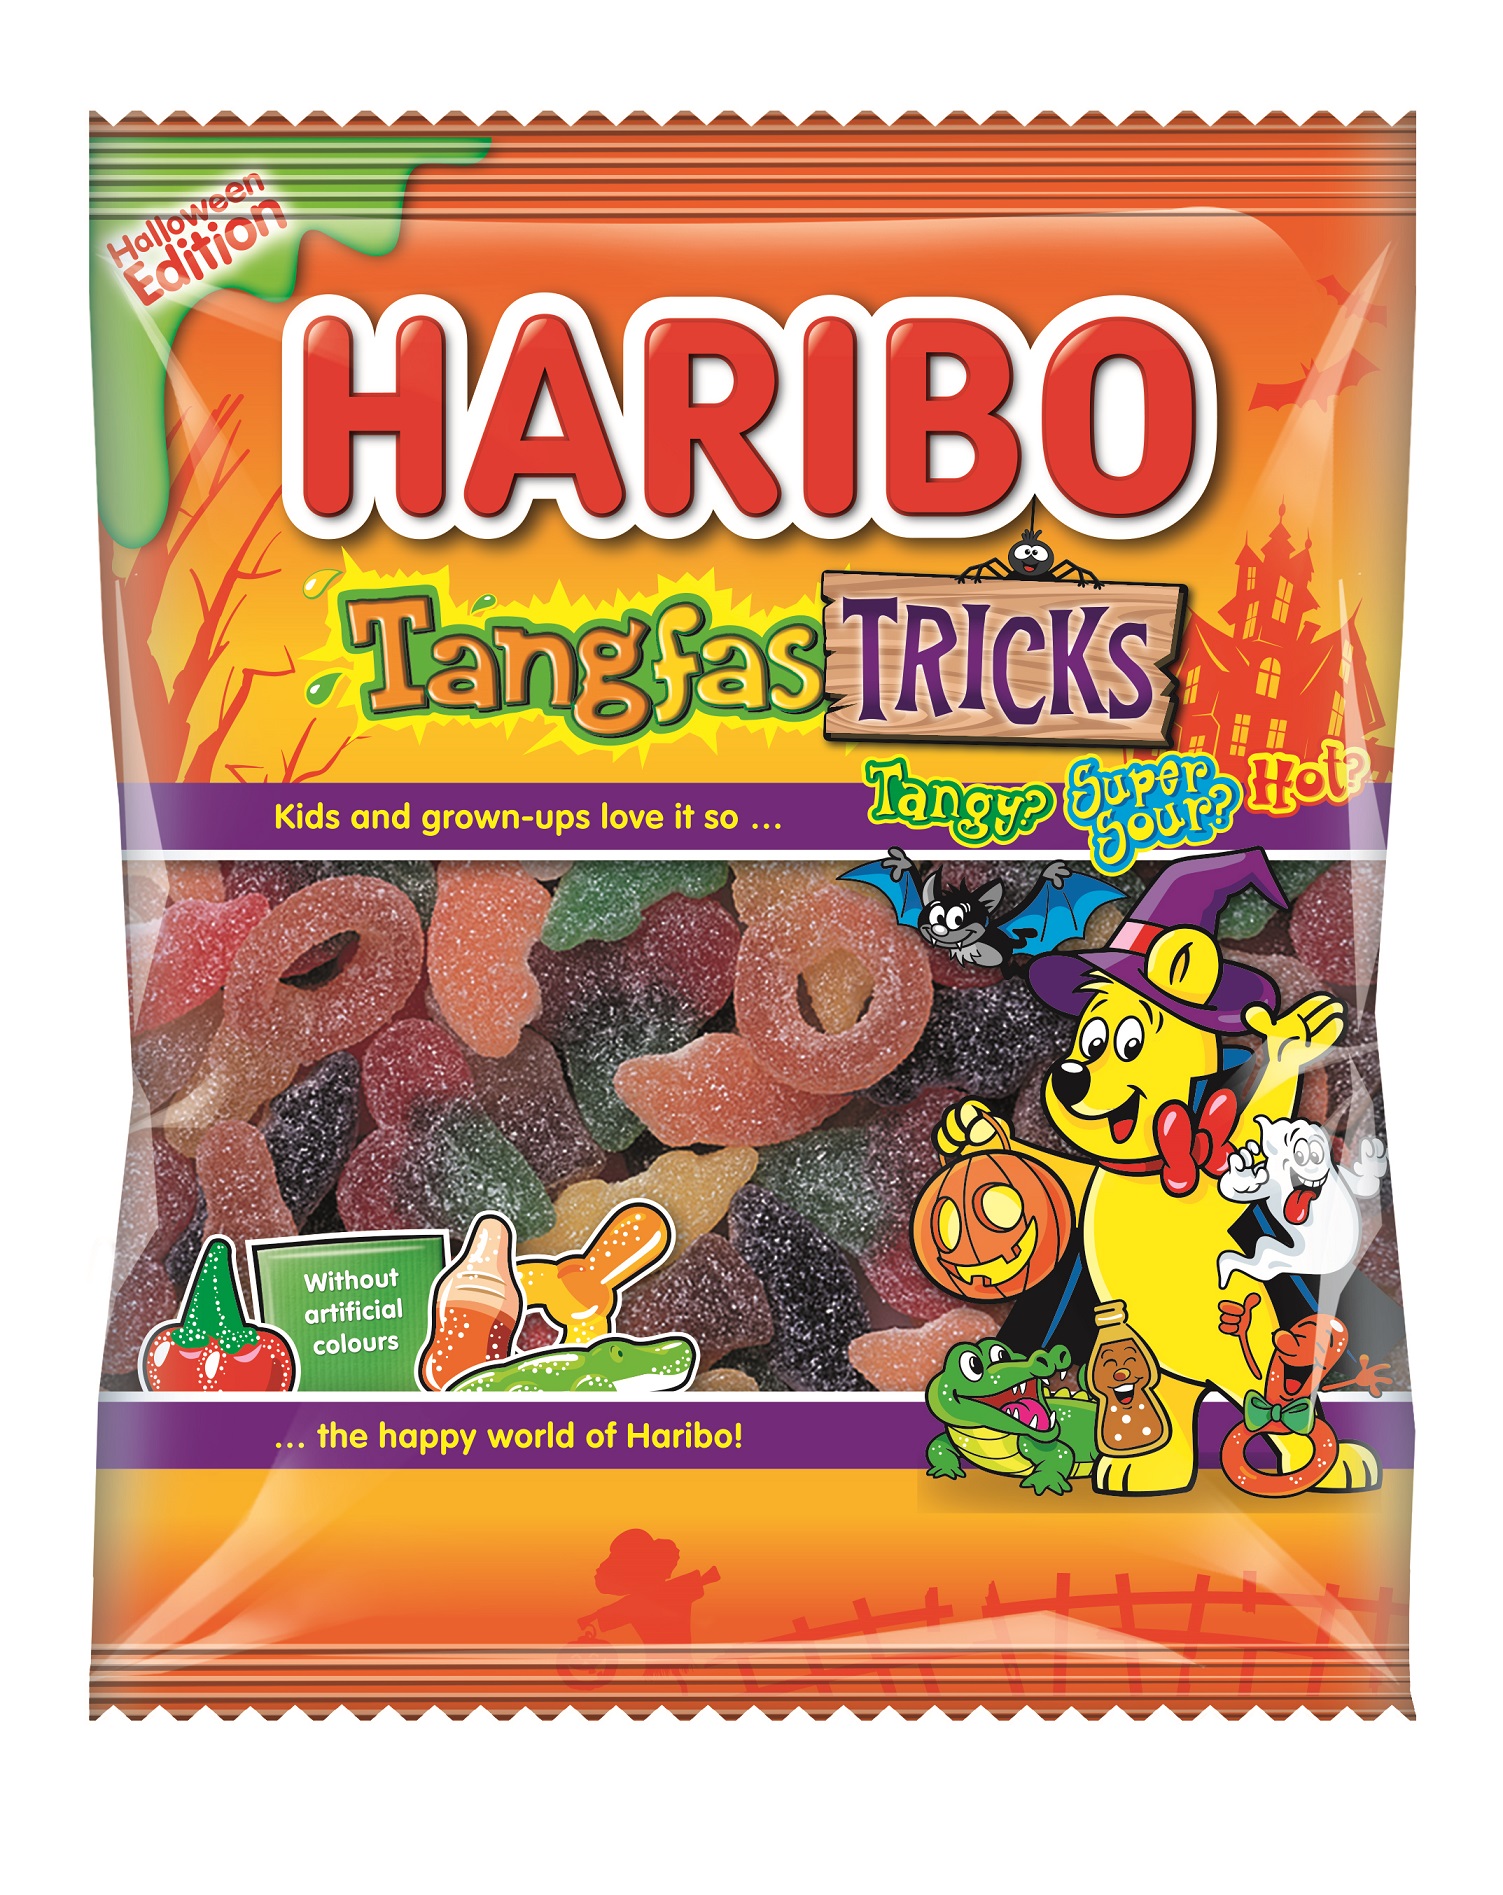 TangfasTricks (Haribo/PA)